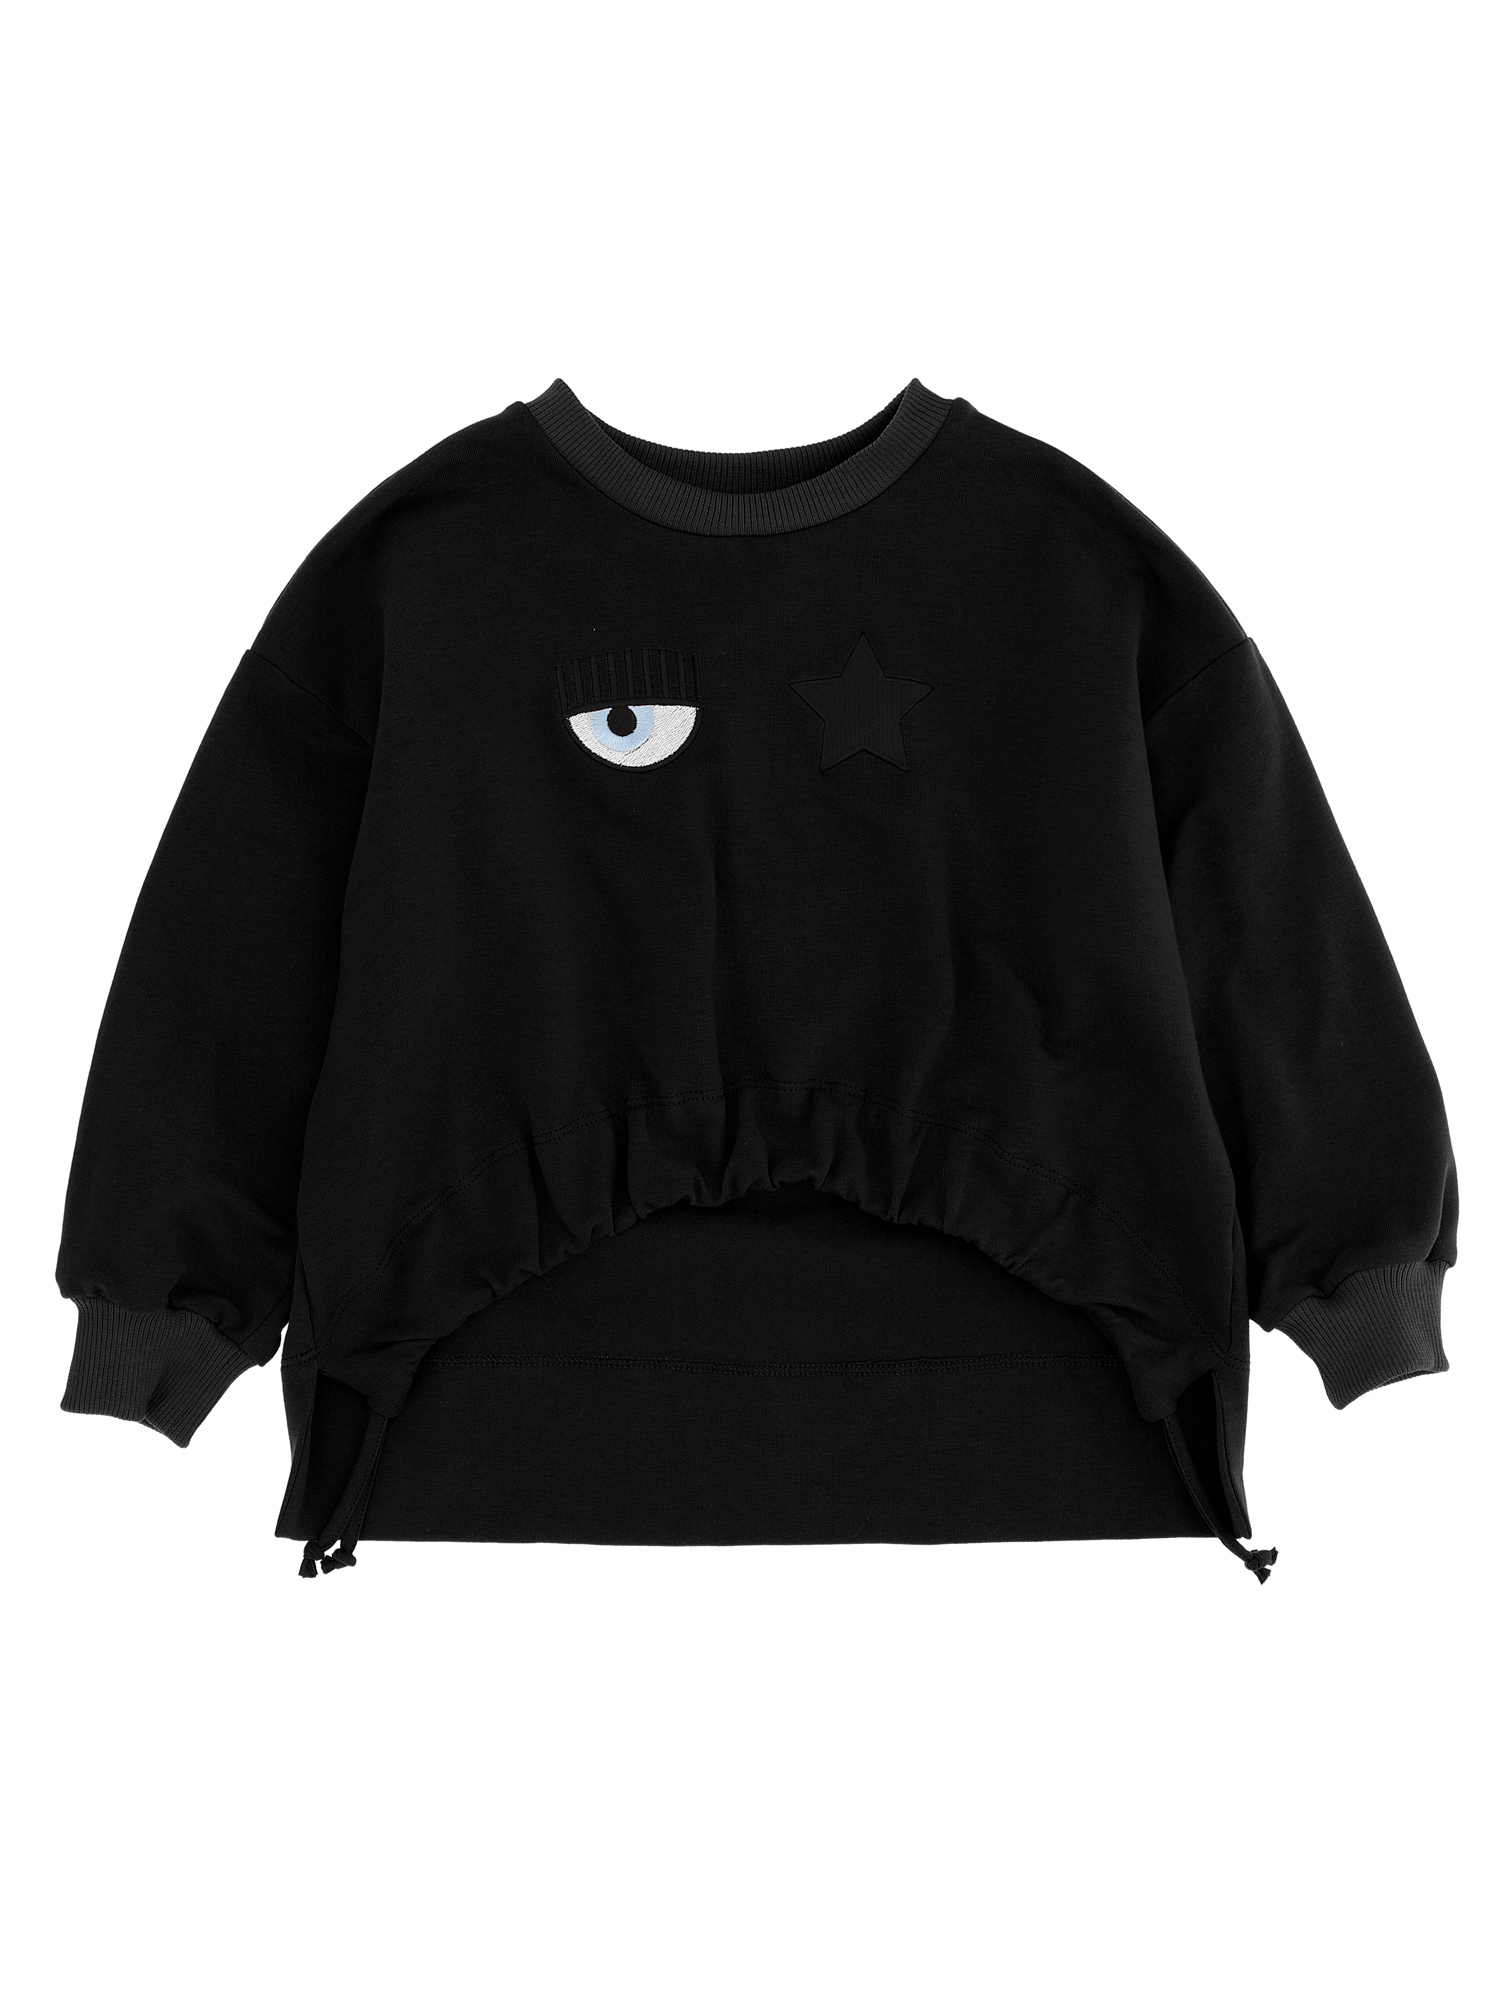 Chiara Ferragni Eyestar Sweatshirt In Black